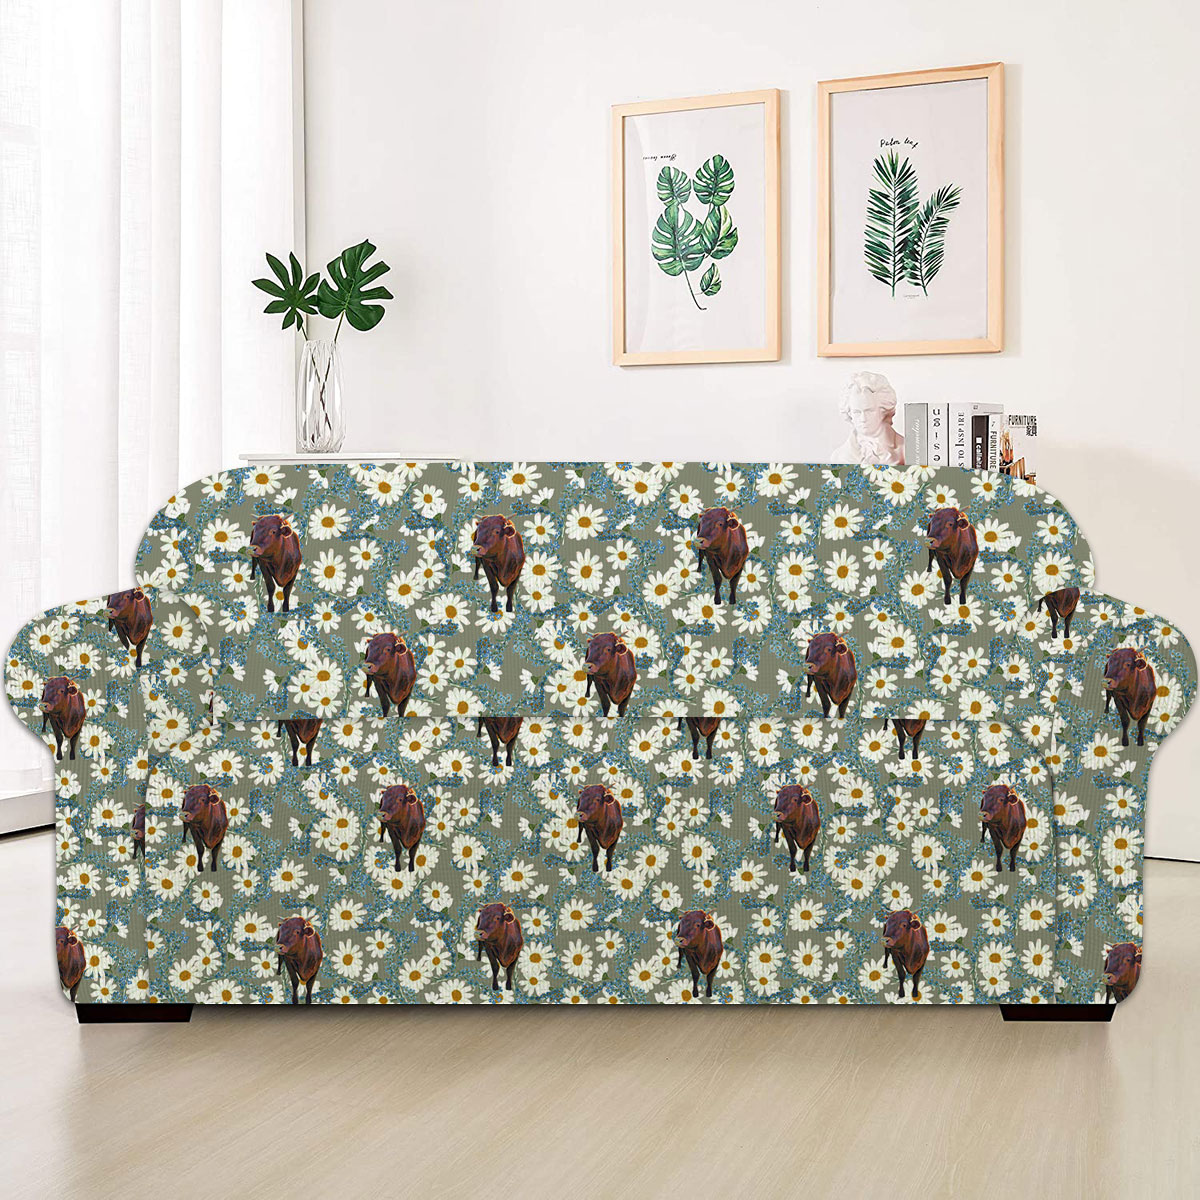 Brahman Camomilles Flower Grey Pattern Sofa Cover